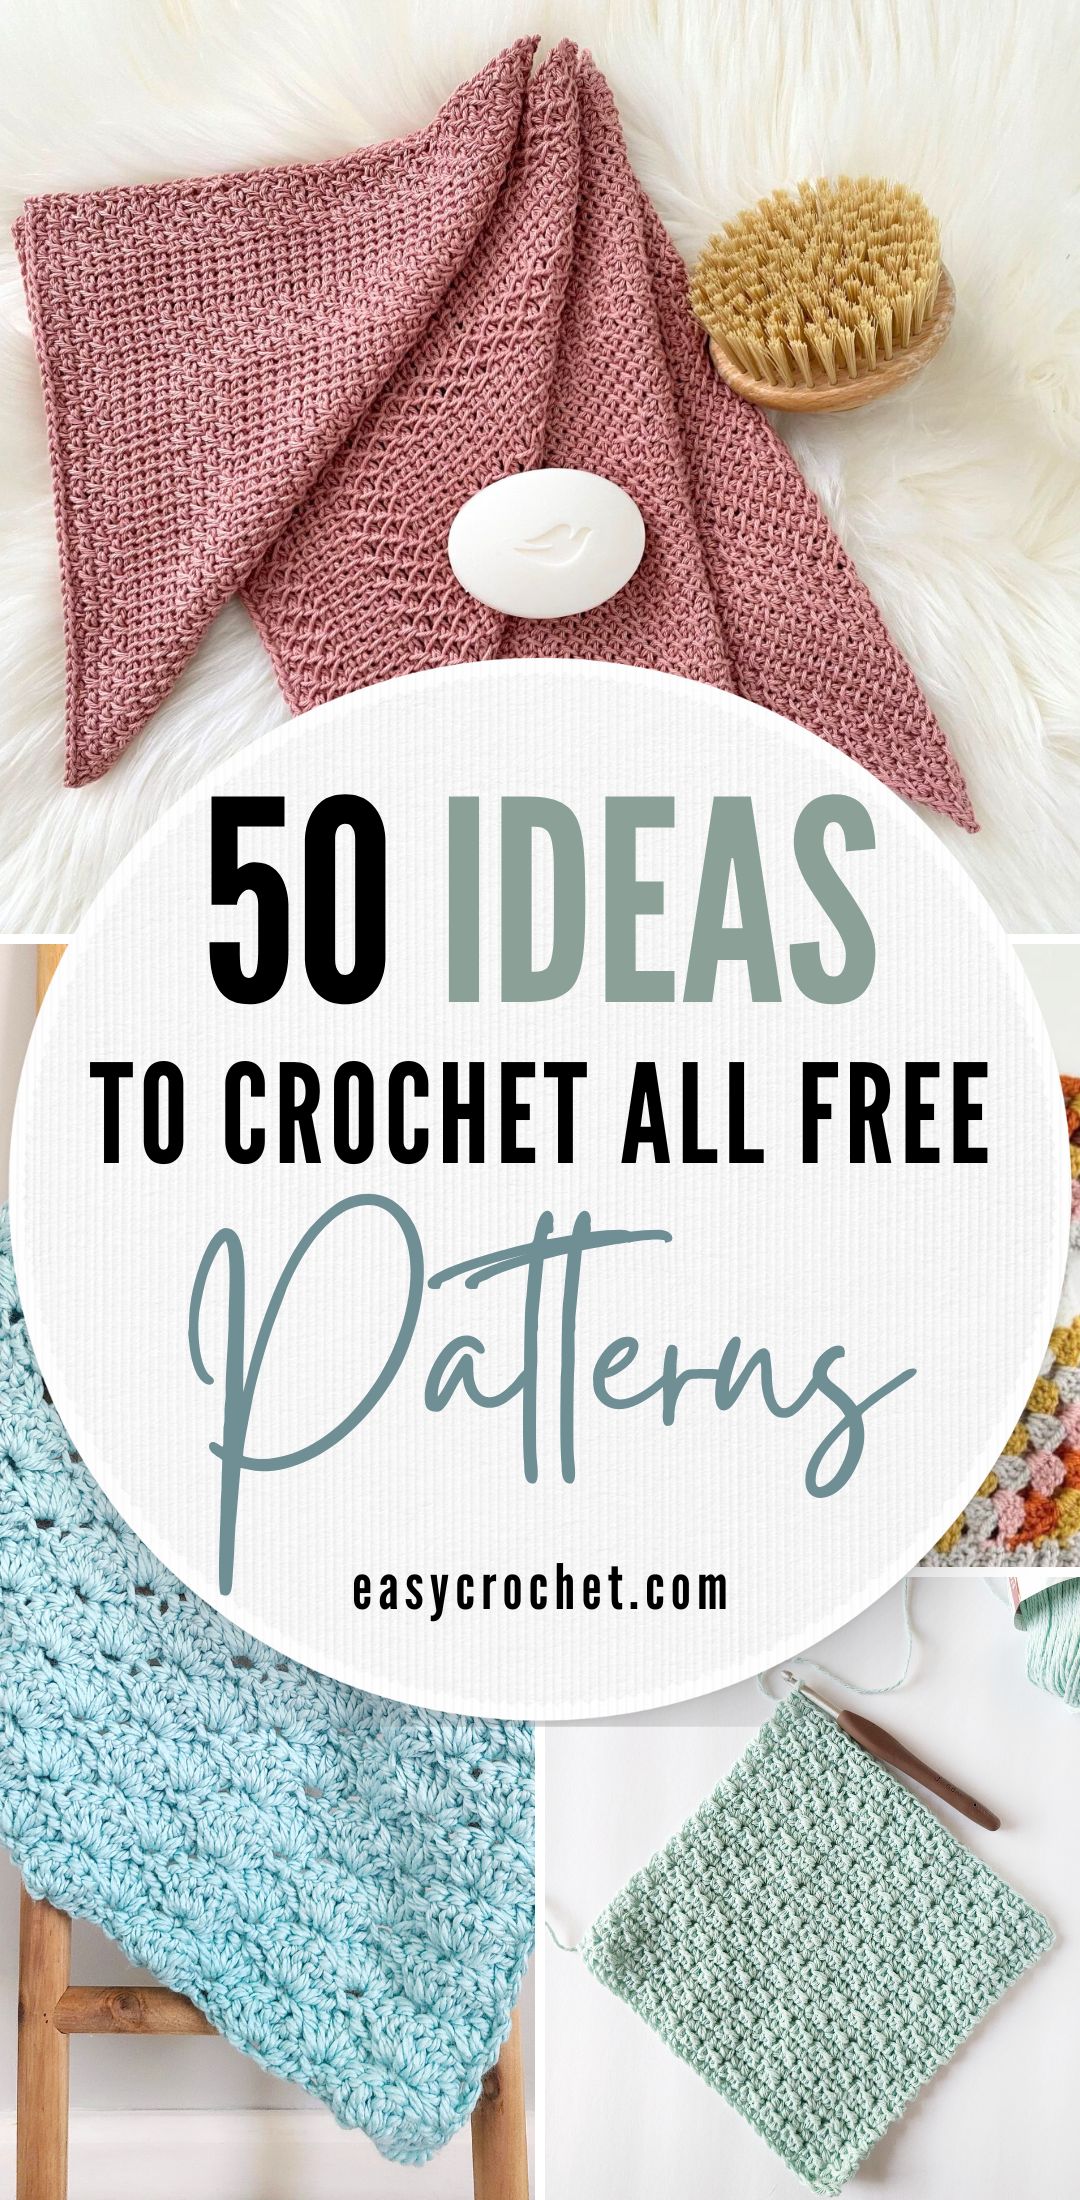 Crochet ideas to Make List of Free Crochet Patterns 